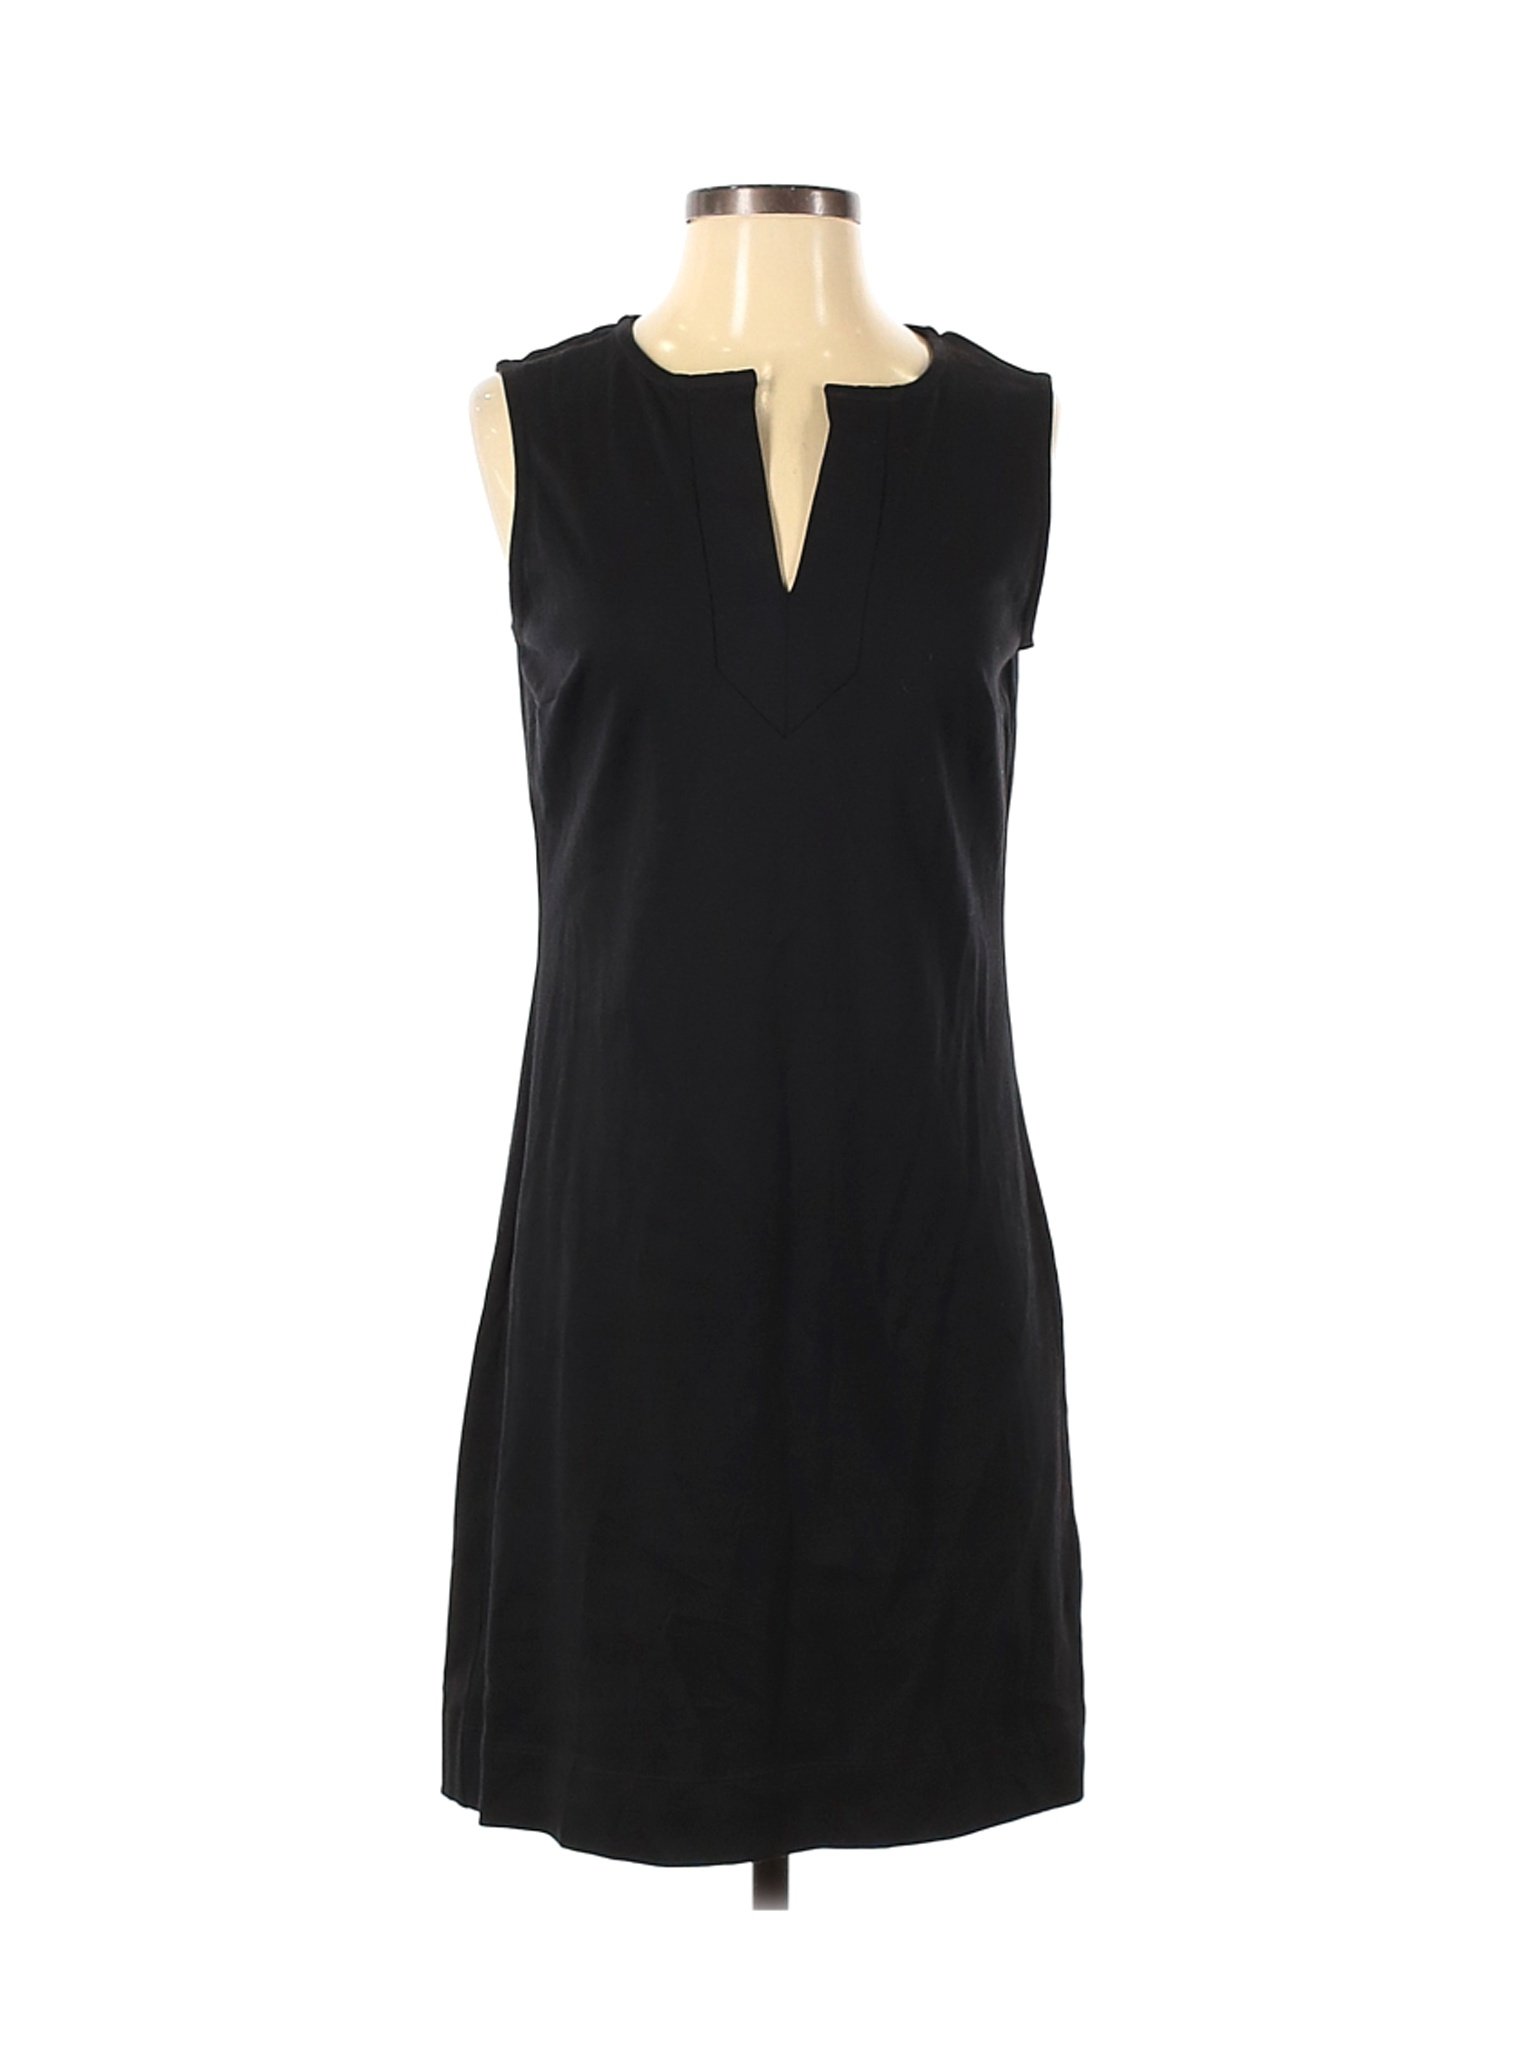 New York & Company Women Black Casual Dress S | eBay